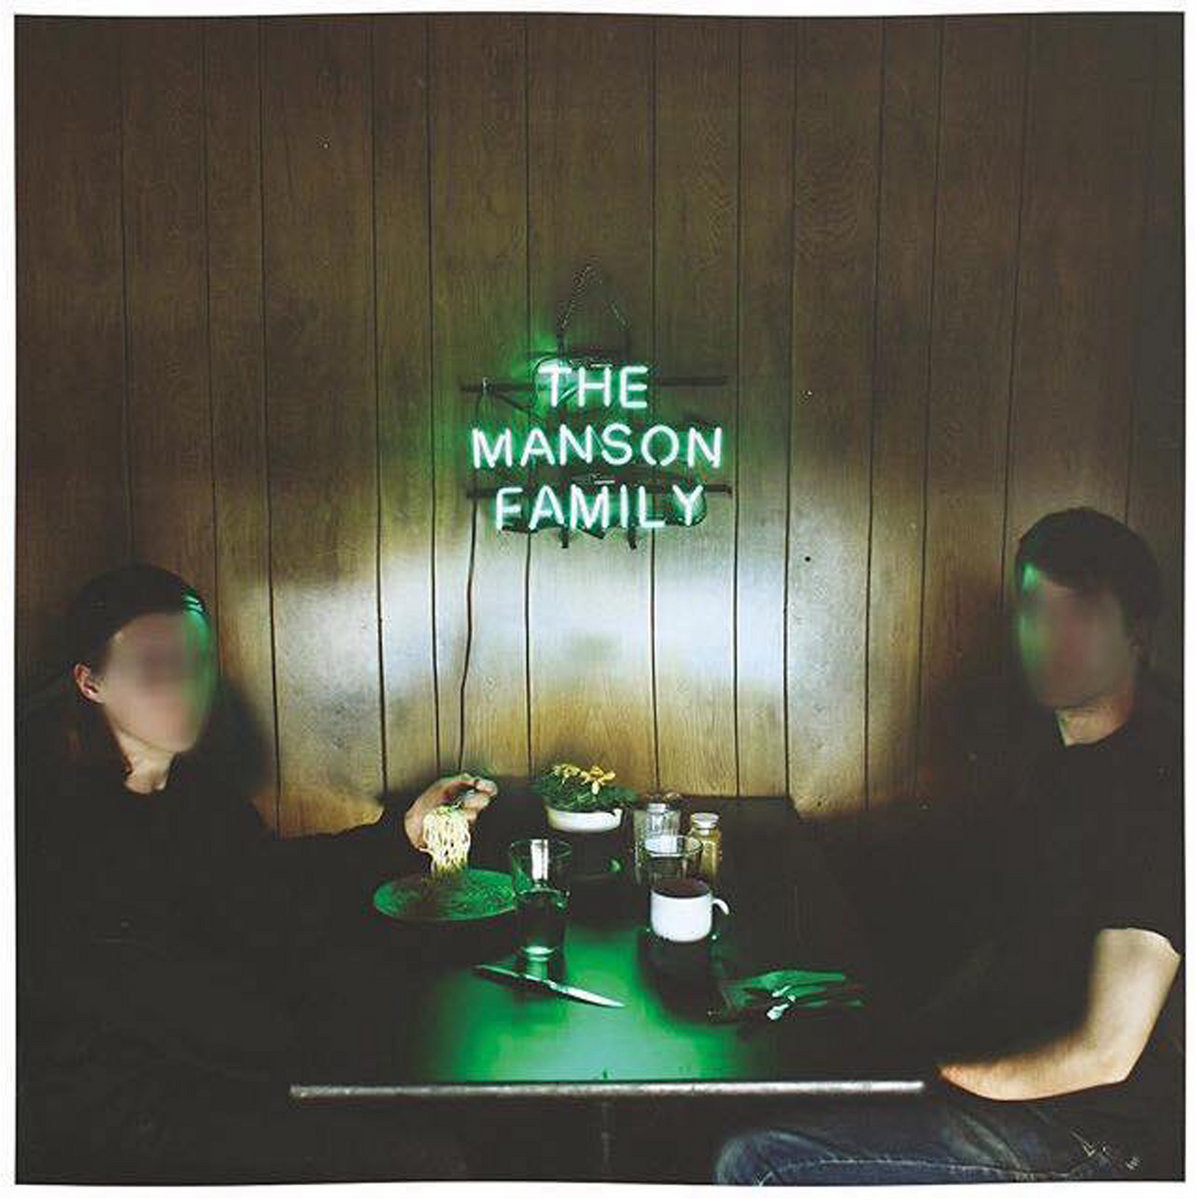 Heart Attack Man "The Manson Family" LP